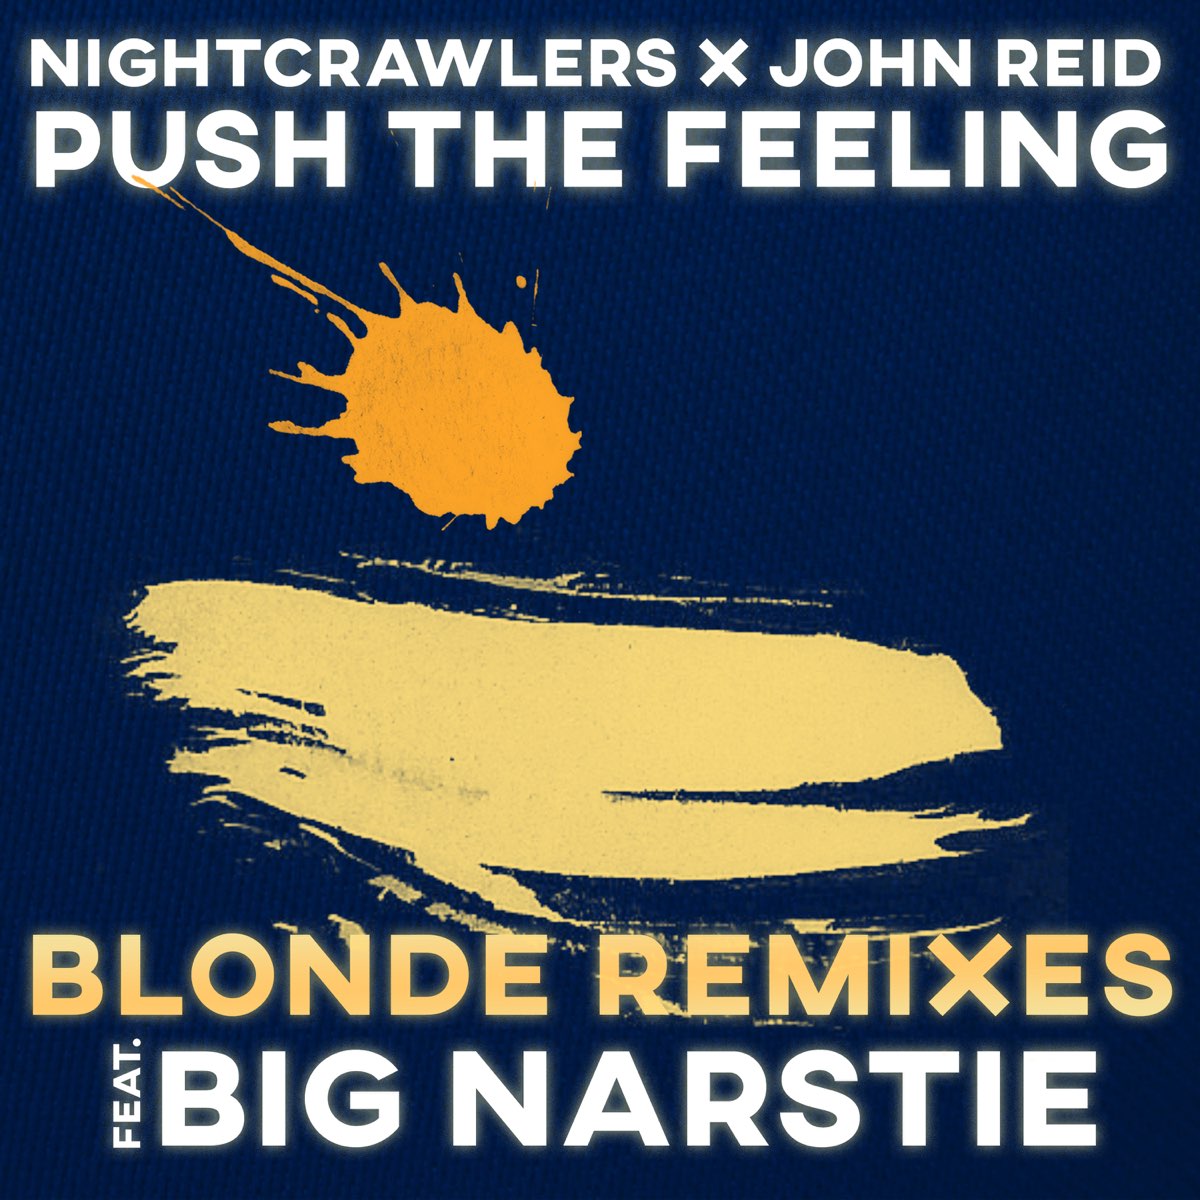 John Reid Nightcrawlers. John Reid (Music Manager). Nightcrawlers Push the feeling on Perfectov Remix. Greeat Jones Nightcrawlers Push the feeling on mp3. Blonde remix